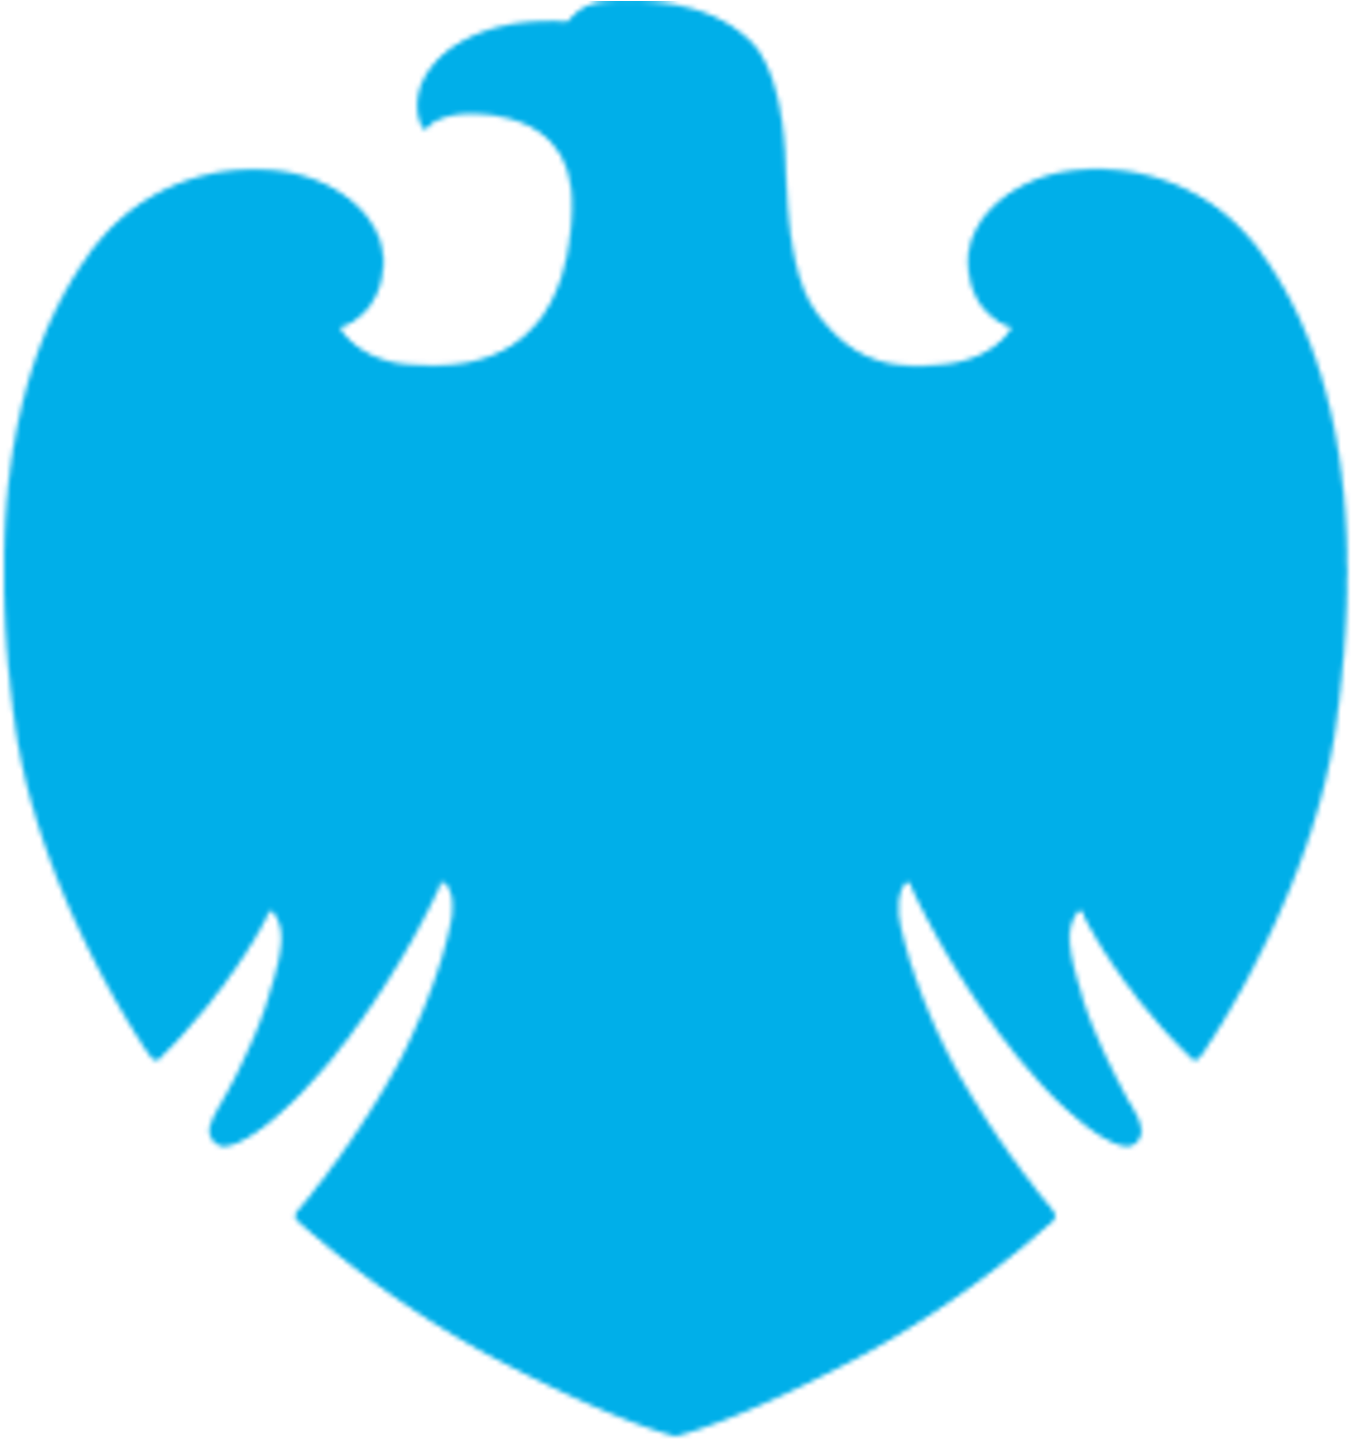 Barclays - Ps4 Logo White Tra